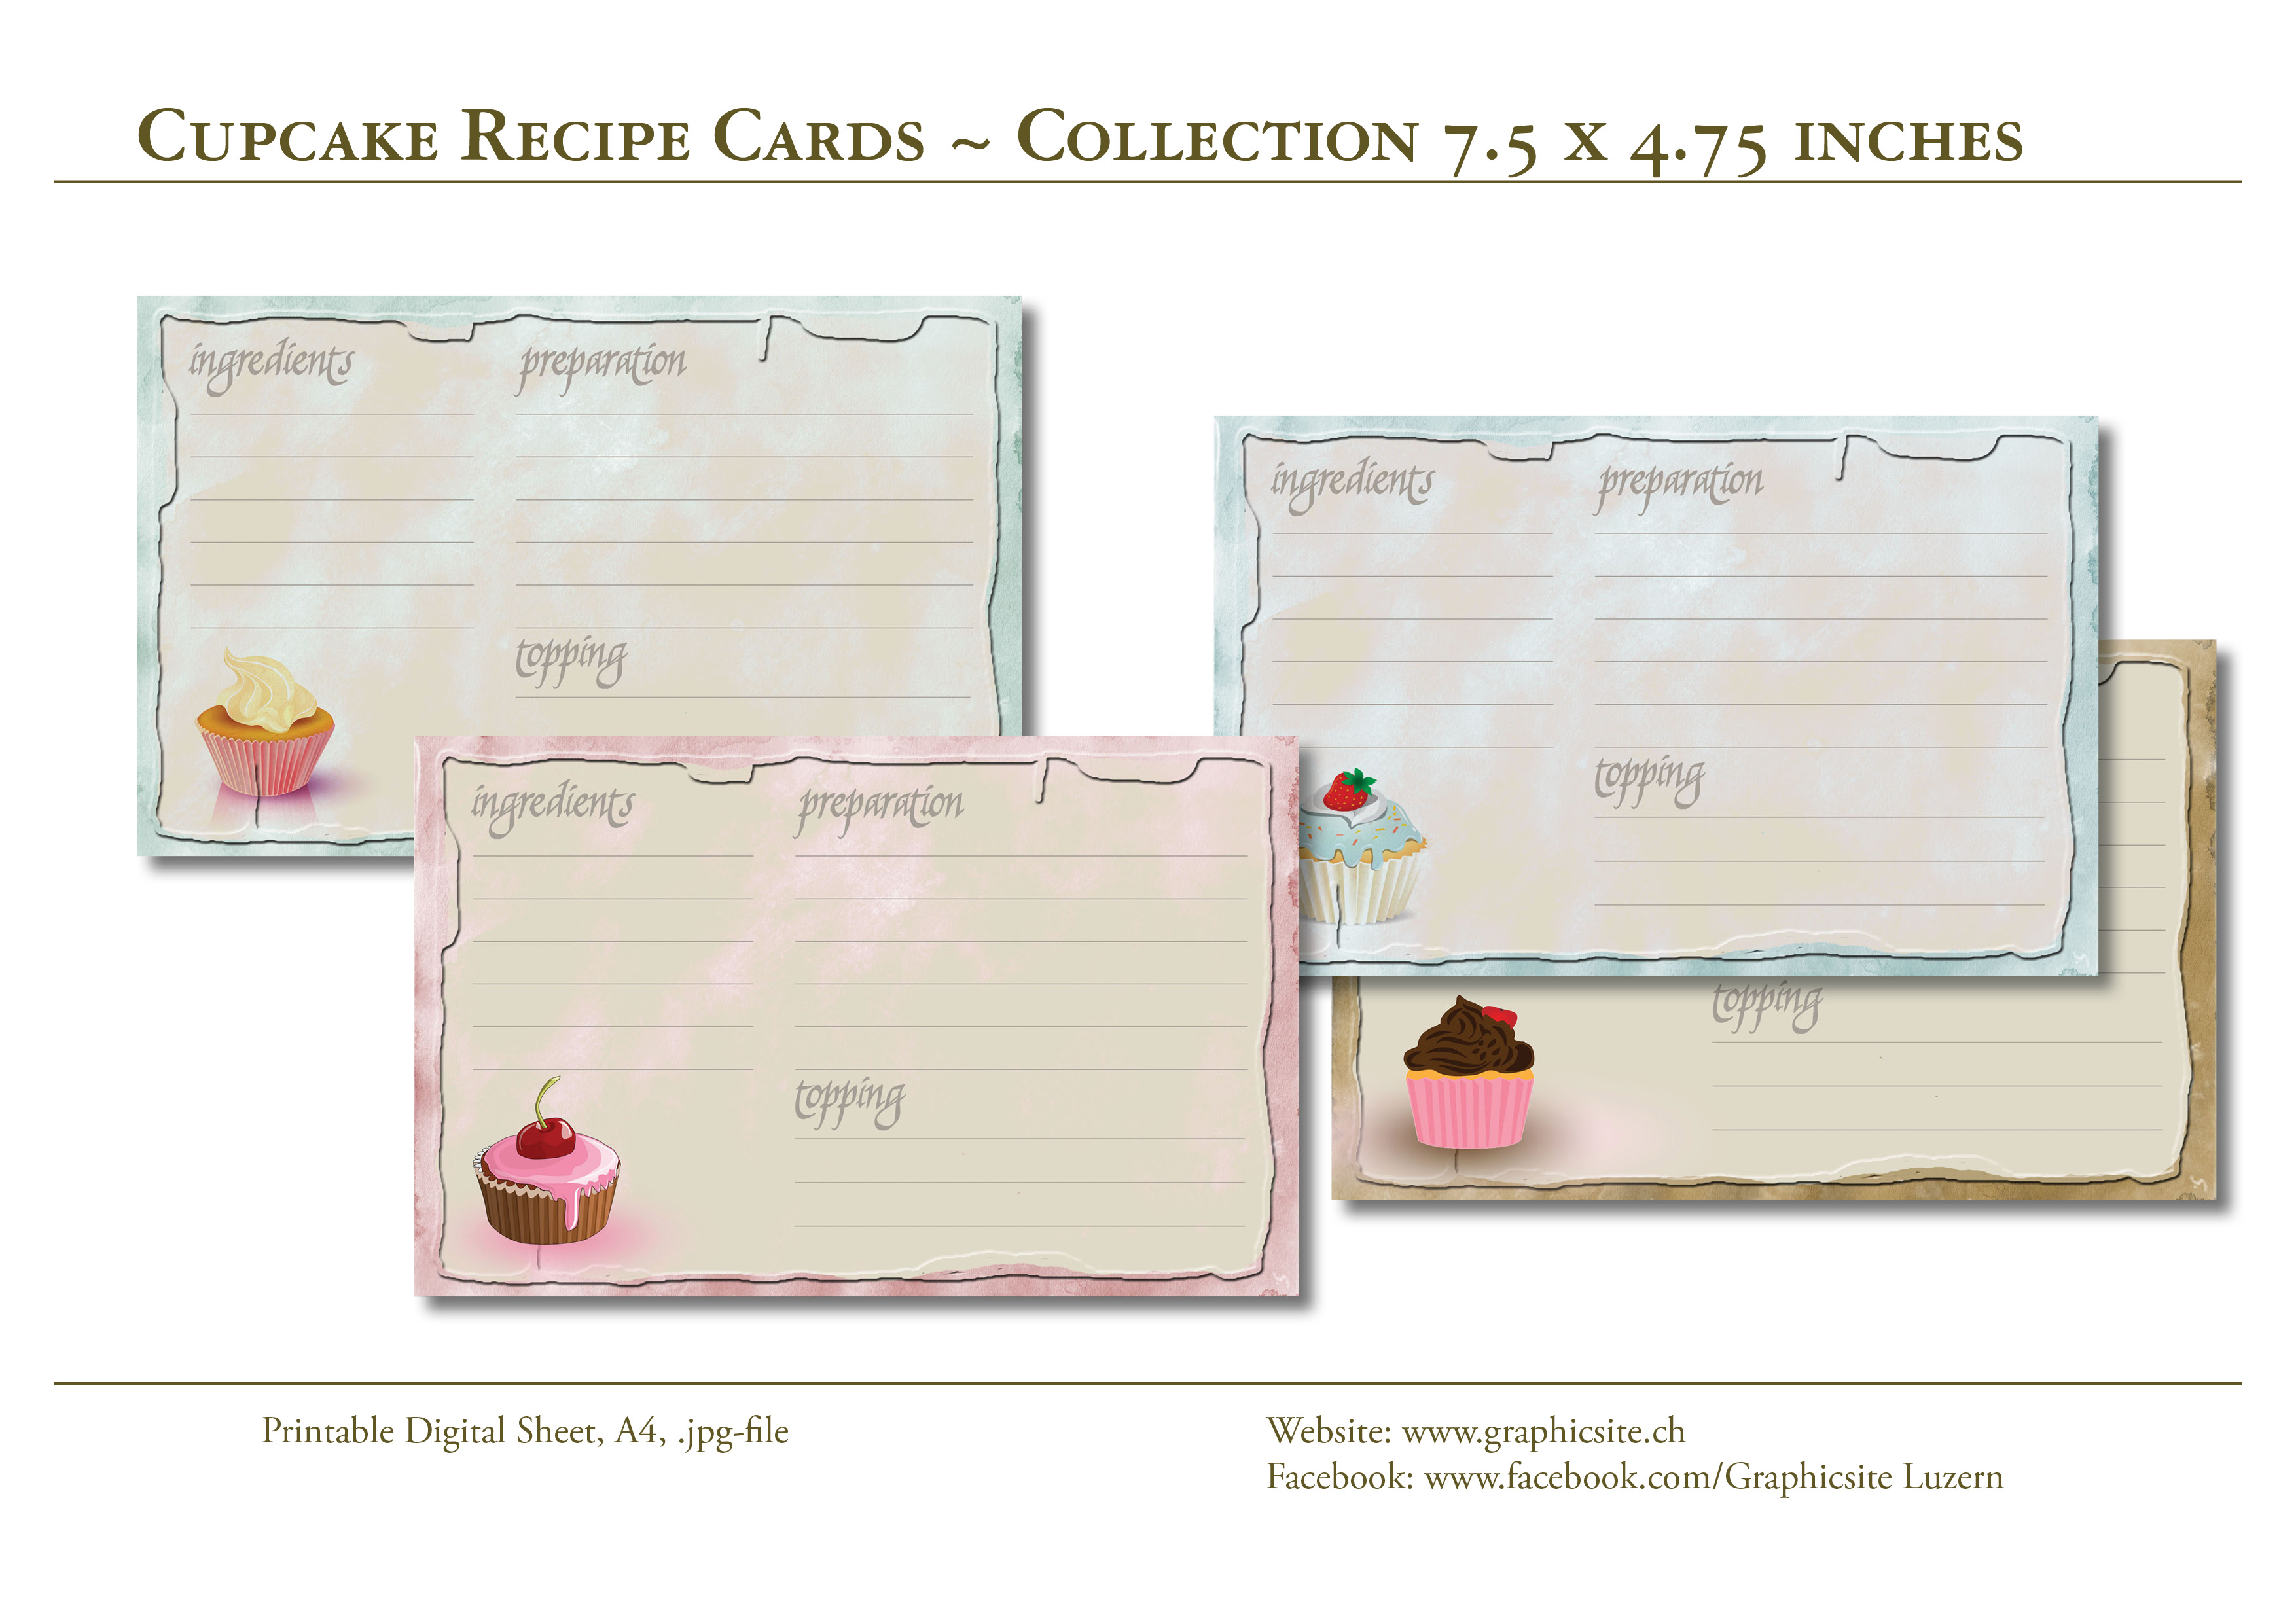 Printable Digital Sheets, Journaling, Cupcake Recipe Cards, Collection